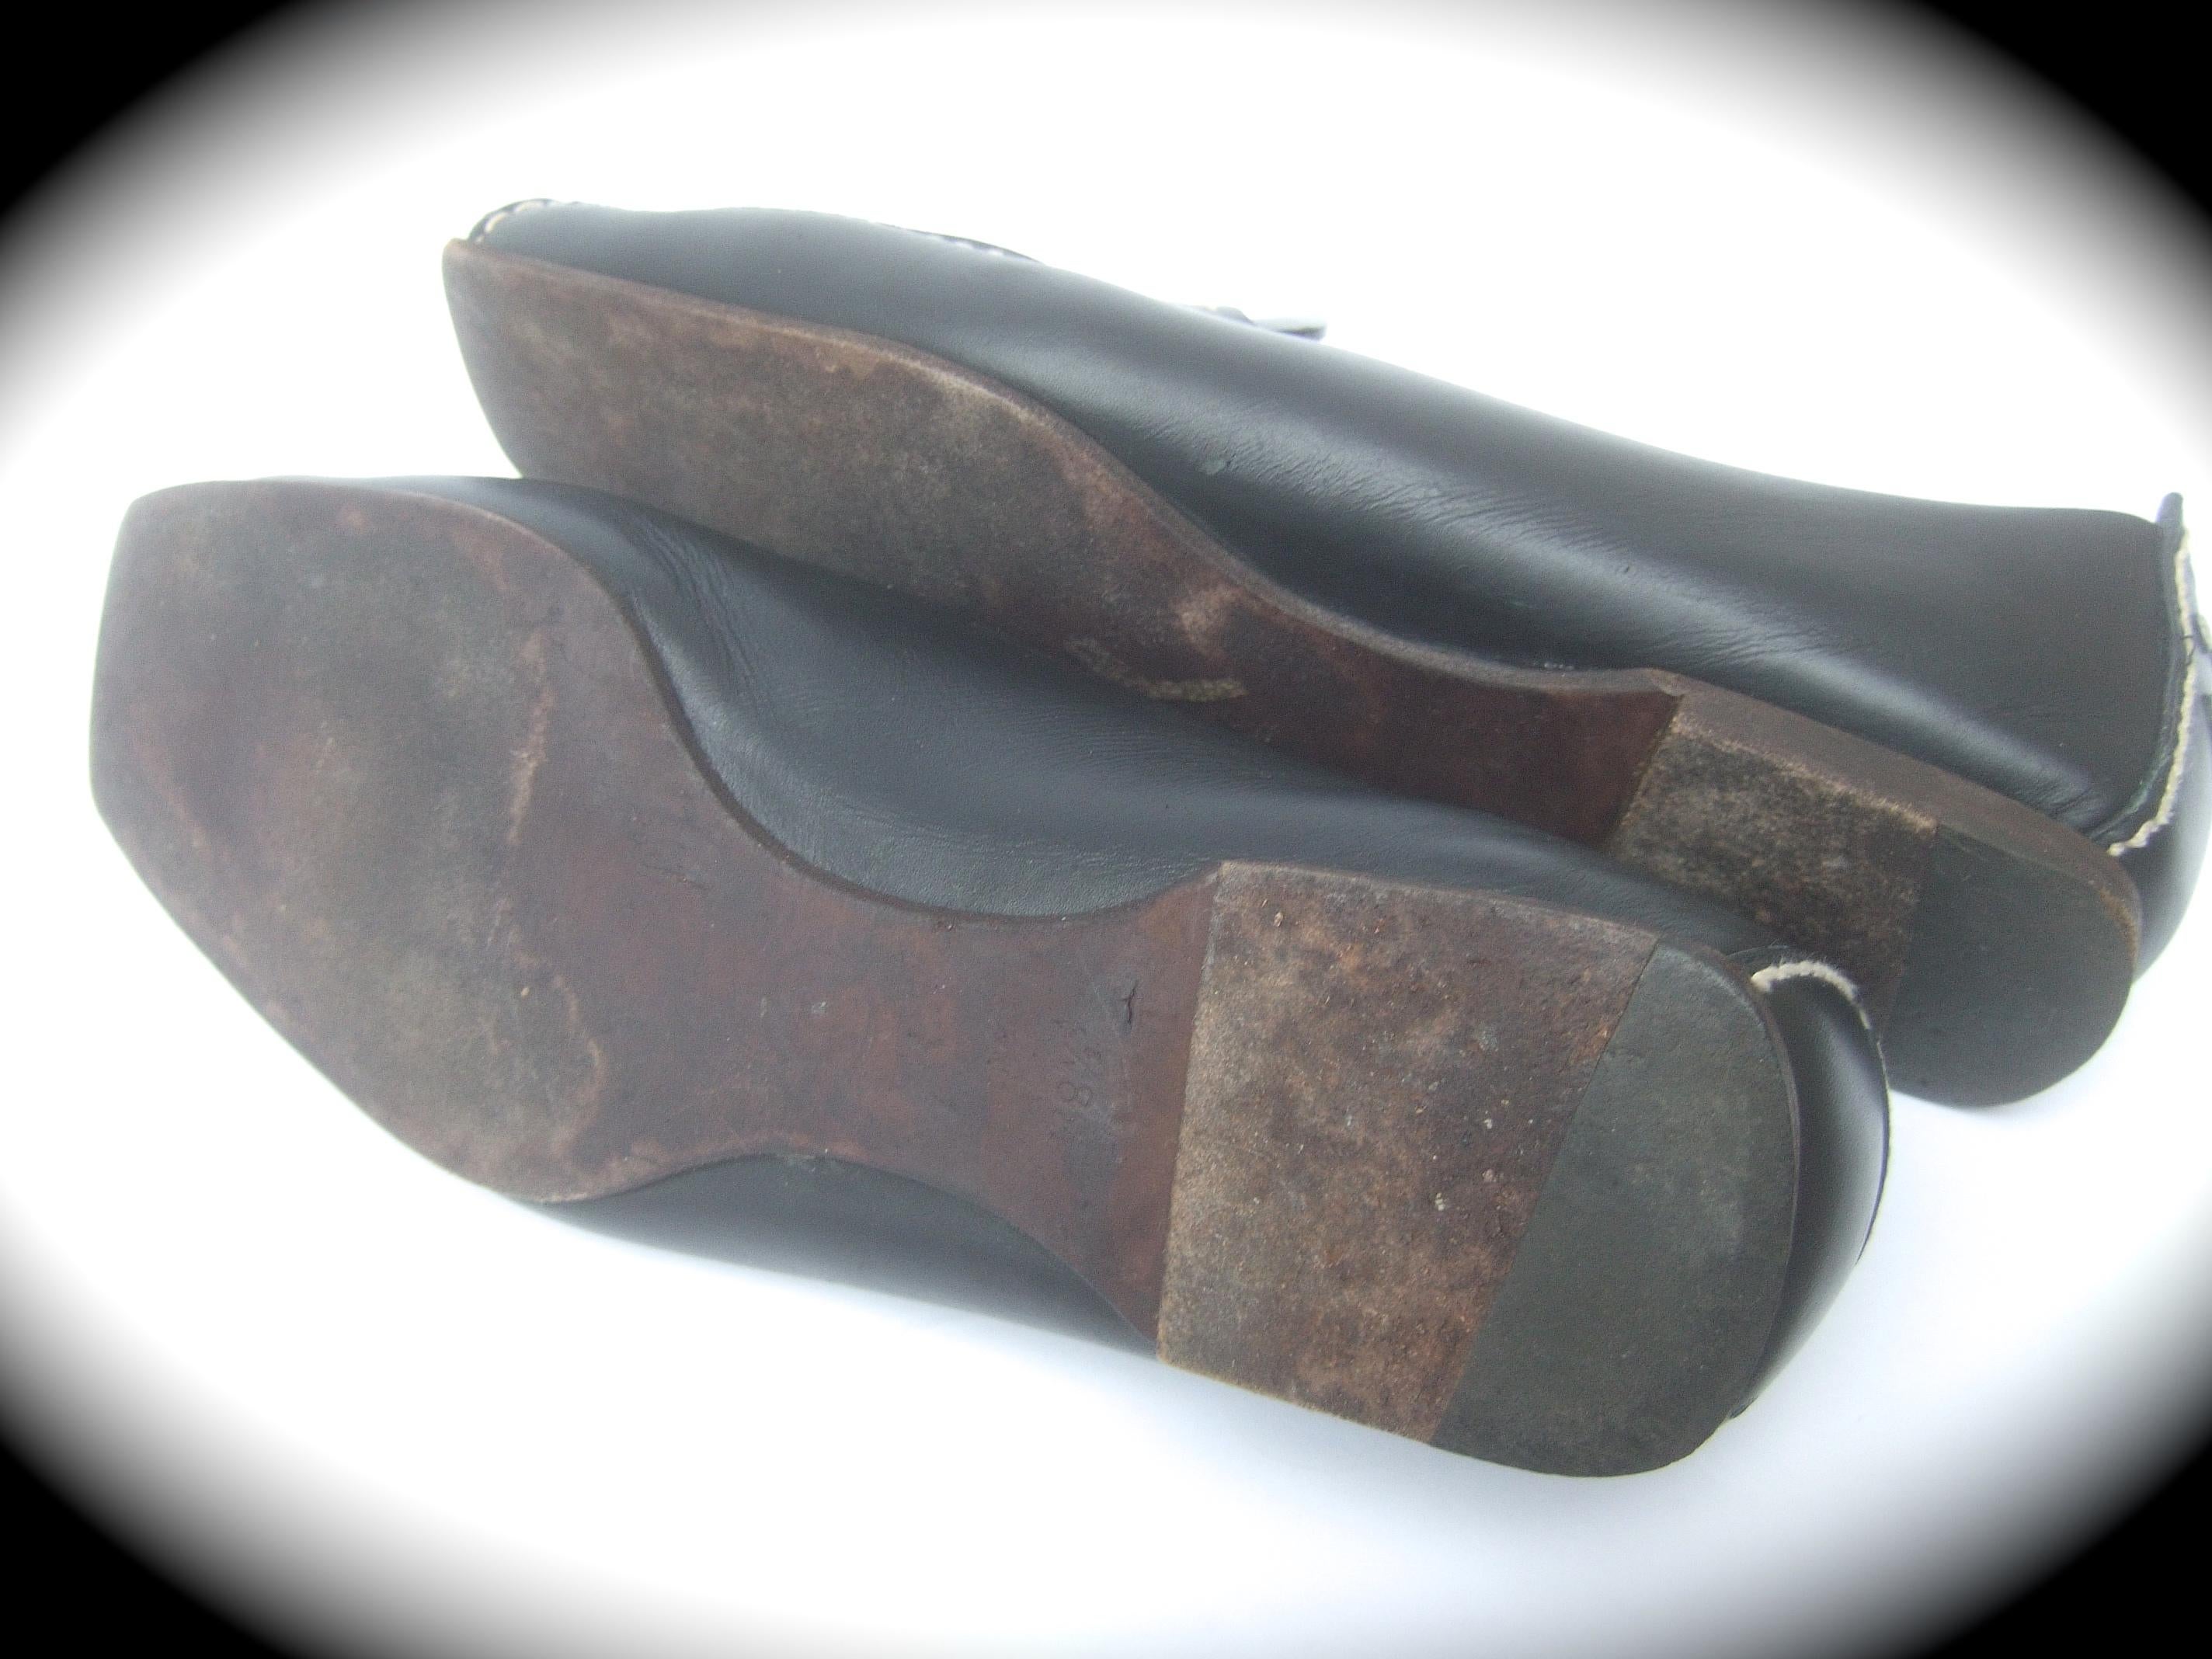 Chanel Black Leather Slip On Italian Low Heel Flats Size 38.5 c 1990s 4